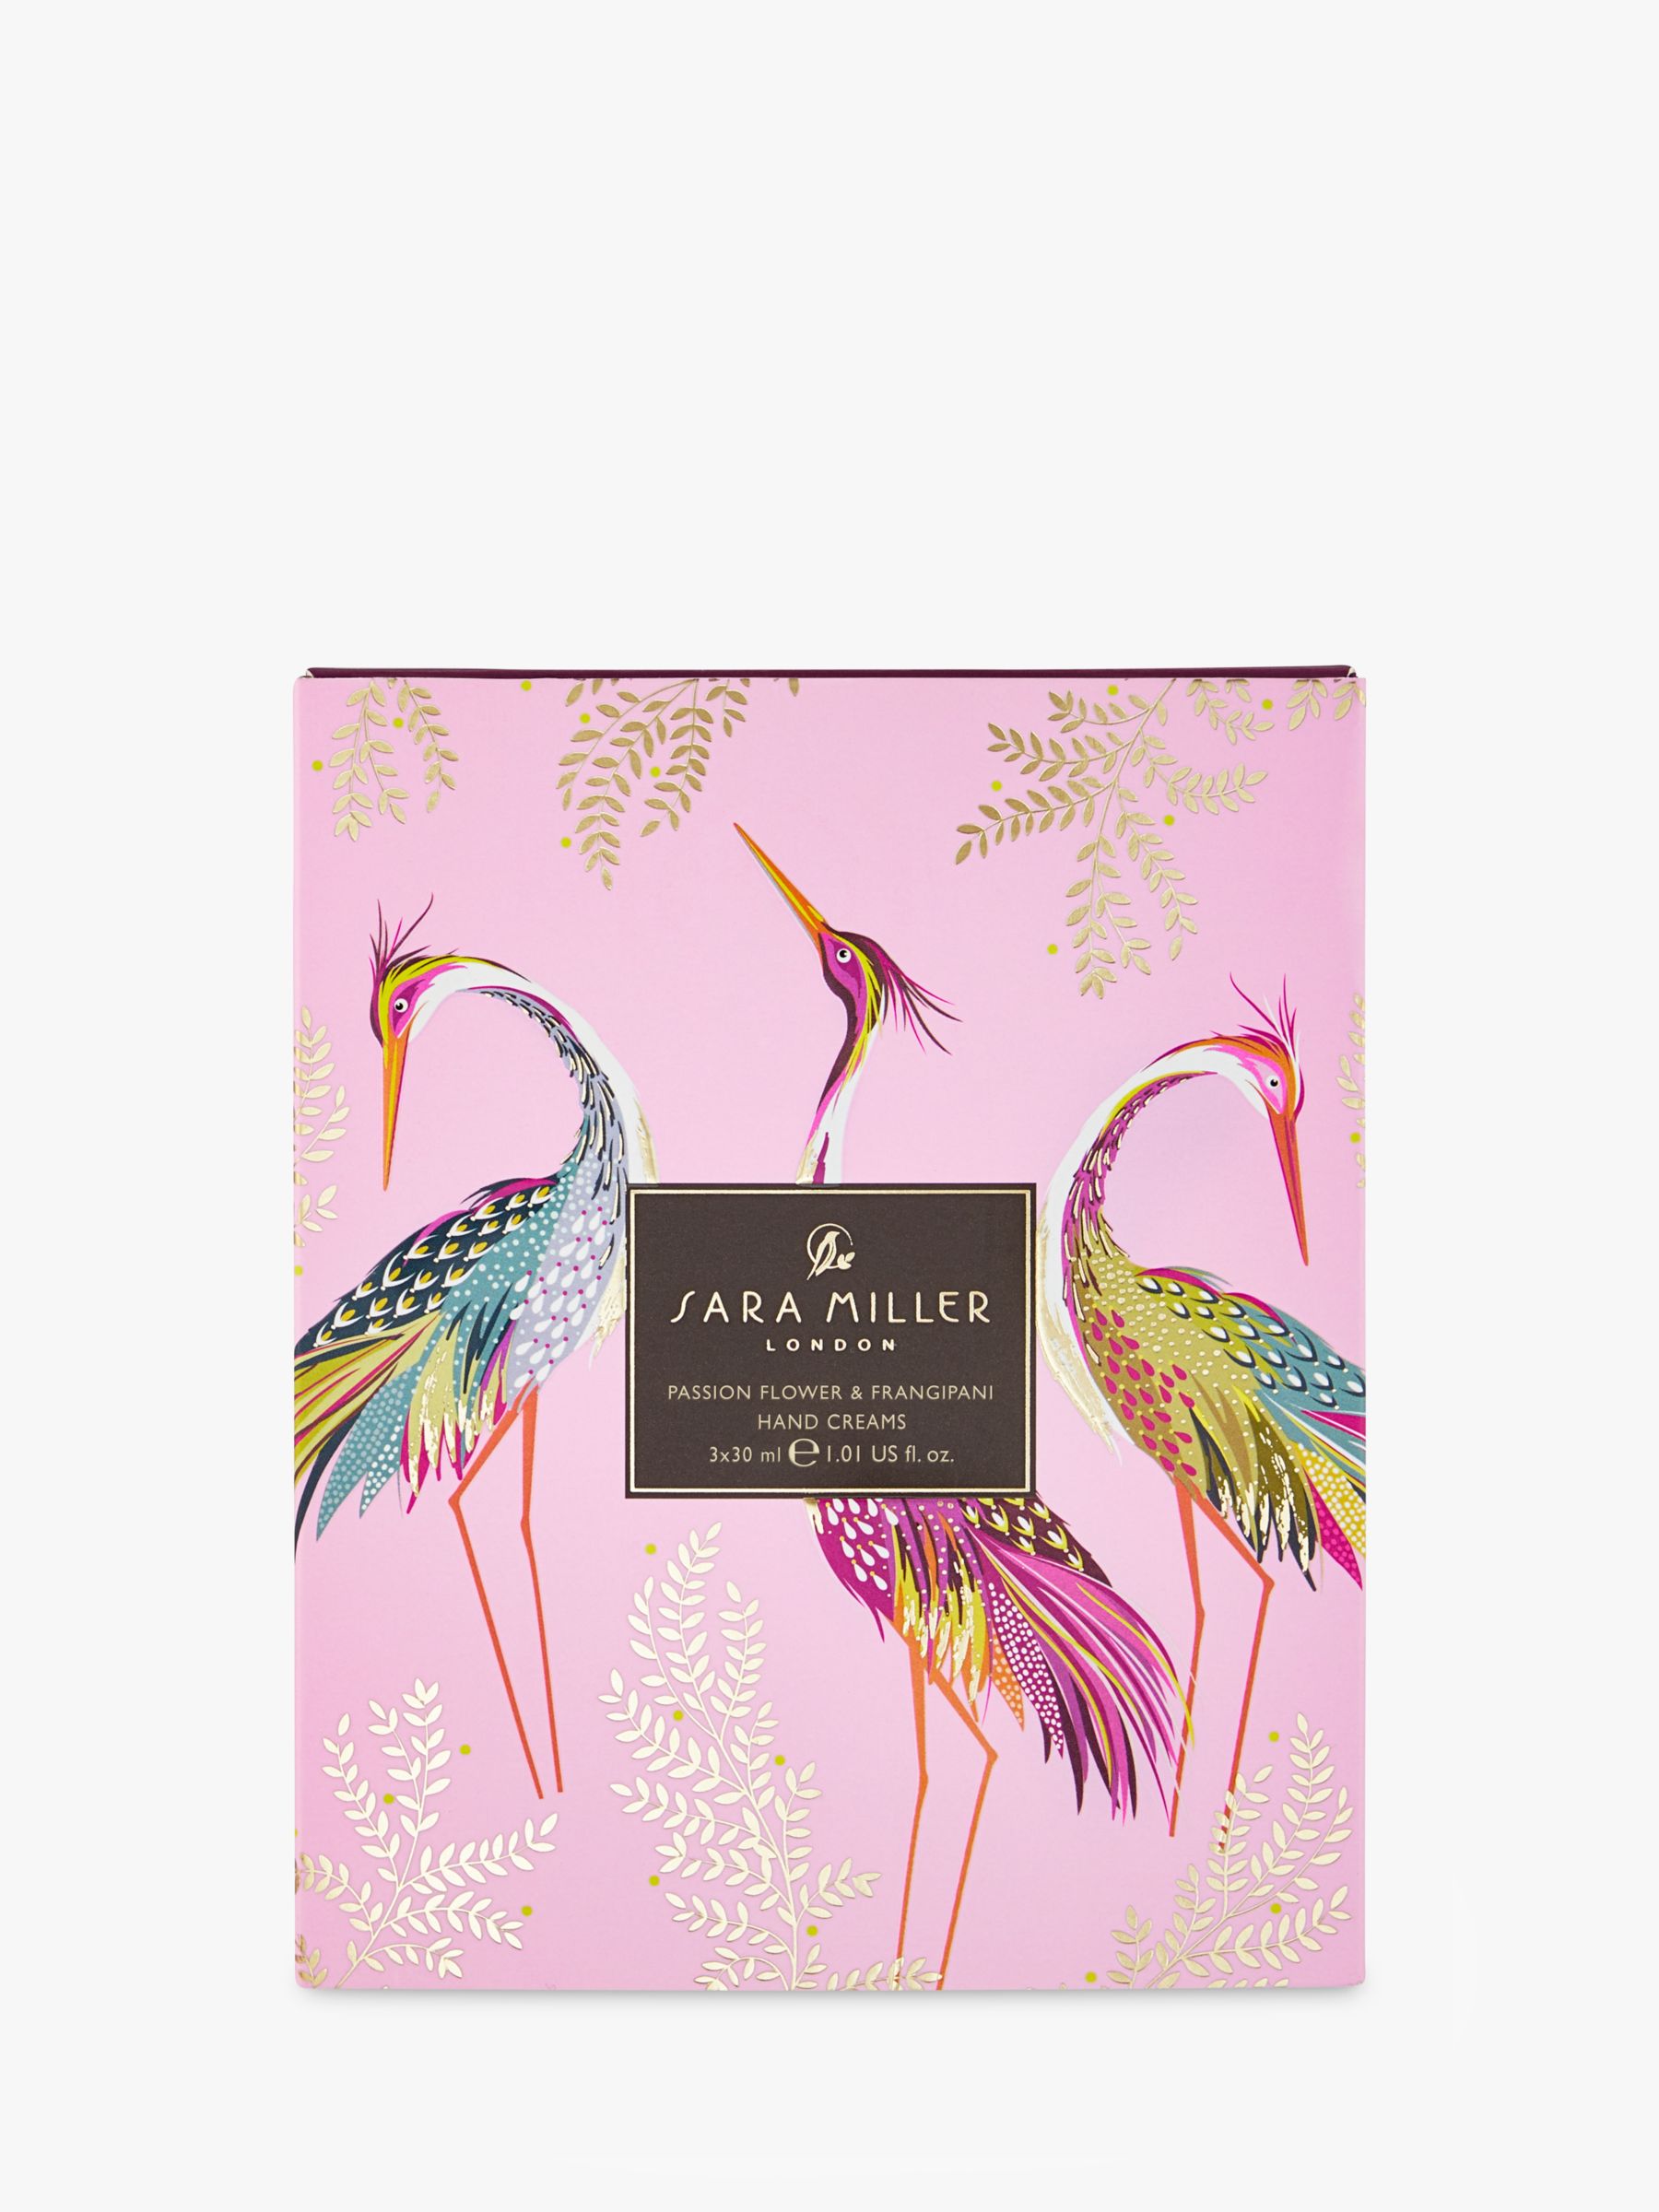 Sara Miller Passion Flower & Frangipani Hand Cream Gift Set